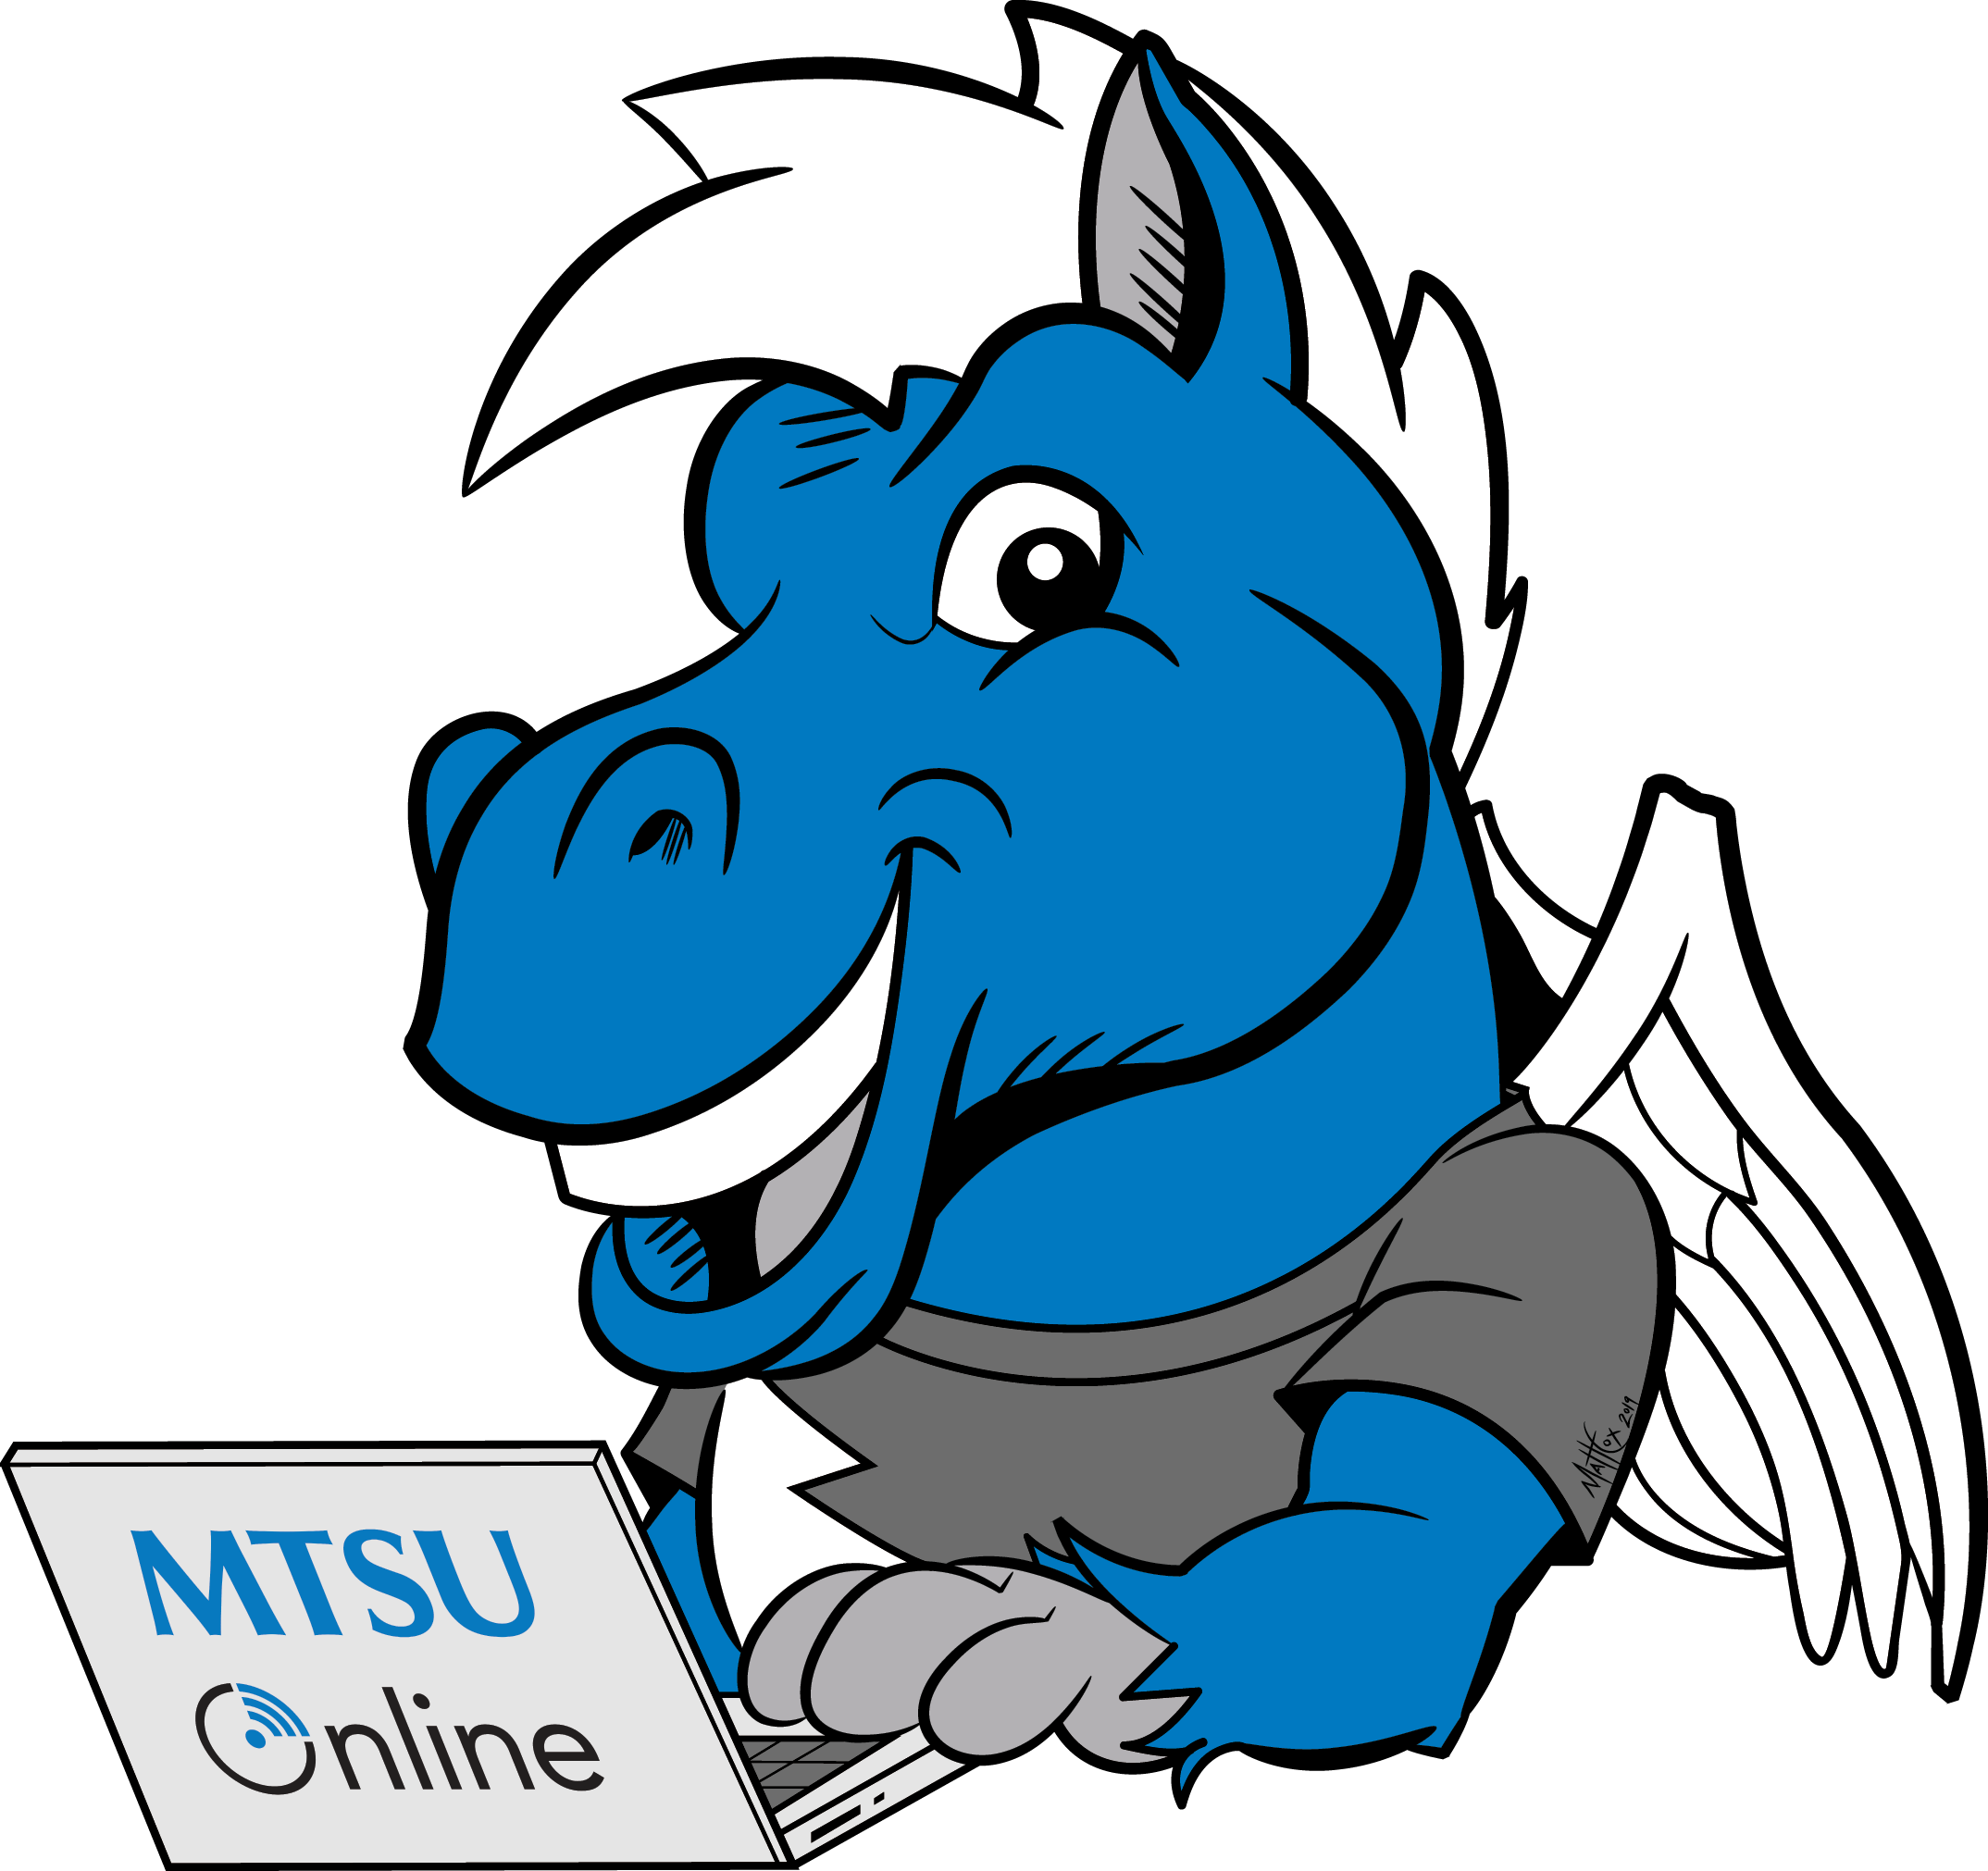 lightning mtsu mascot holding laptop